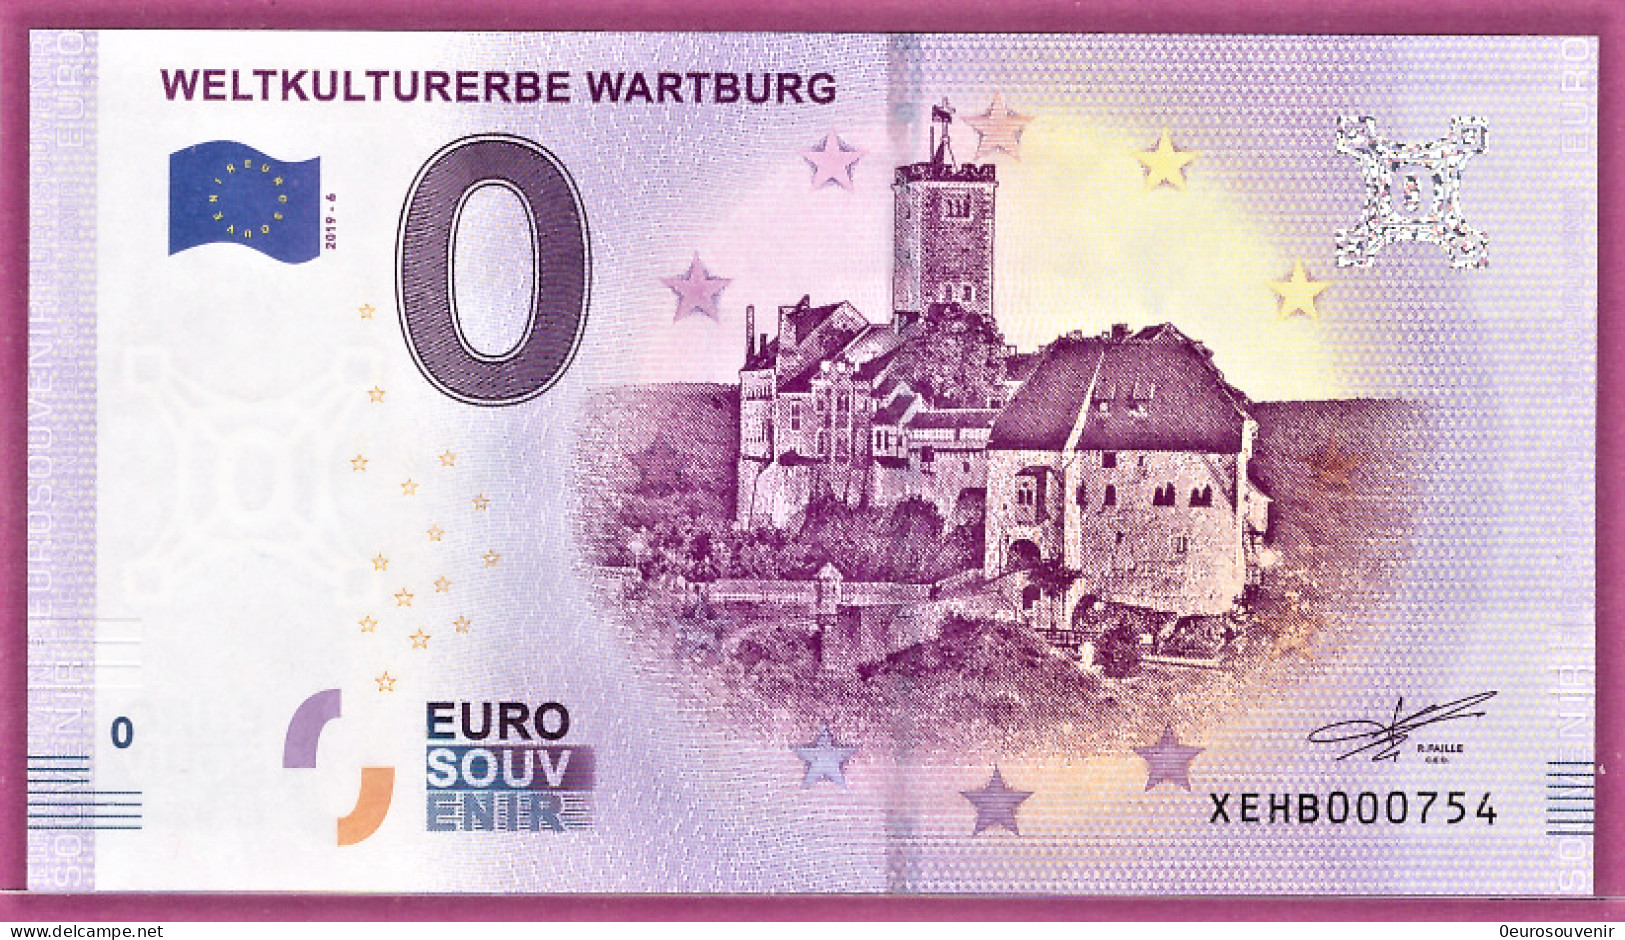 0-Euro XEHB 2019-6 /1 WELTKULTURERBE WARTBURG R3.1 - Private Proofs / Unofficial